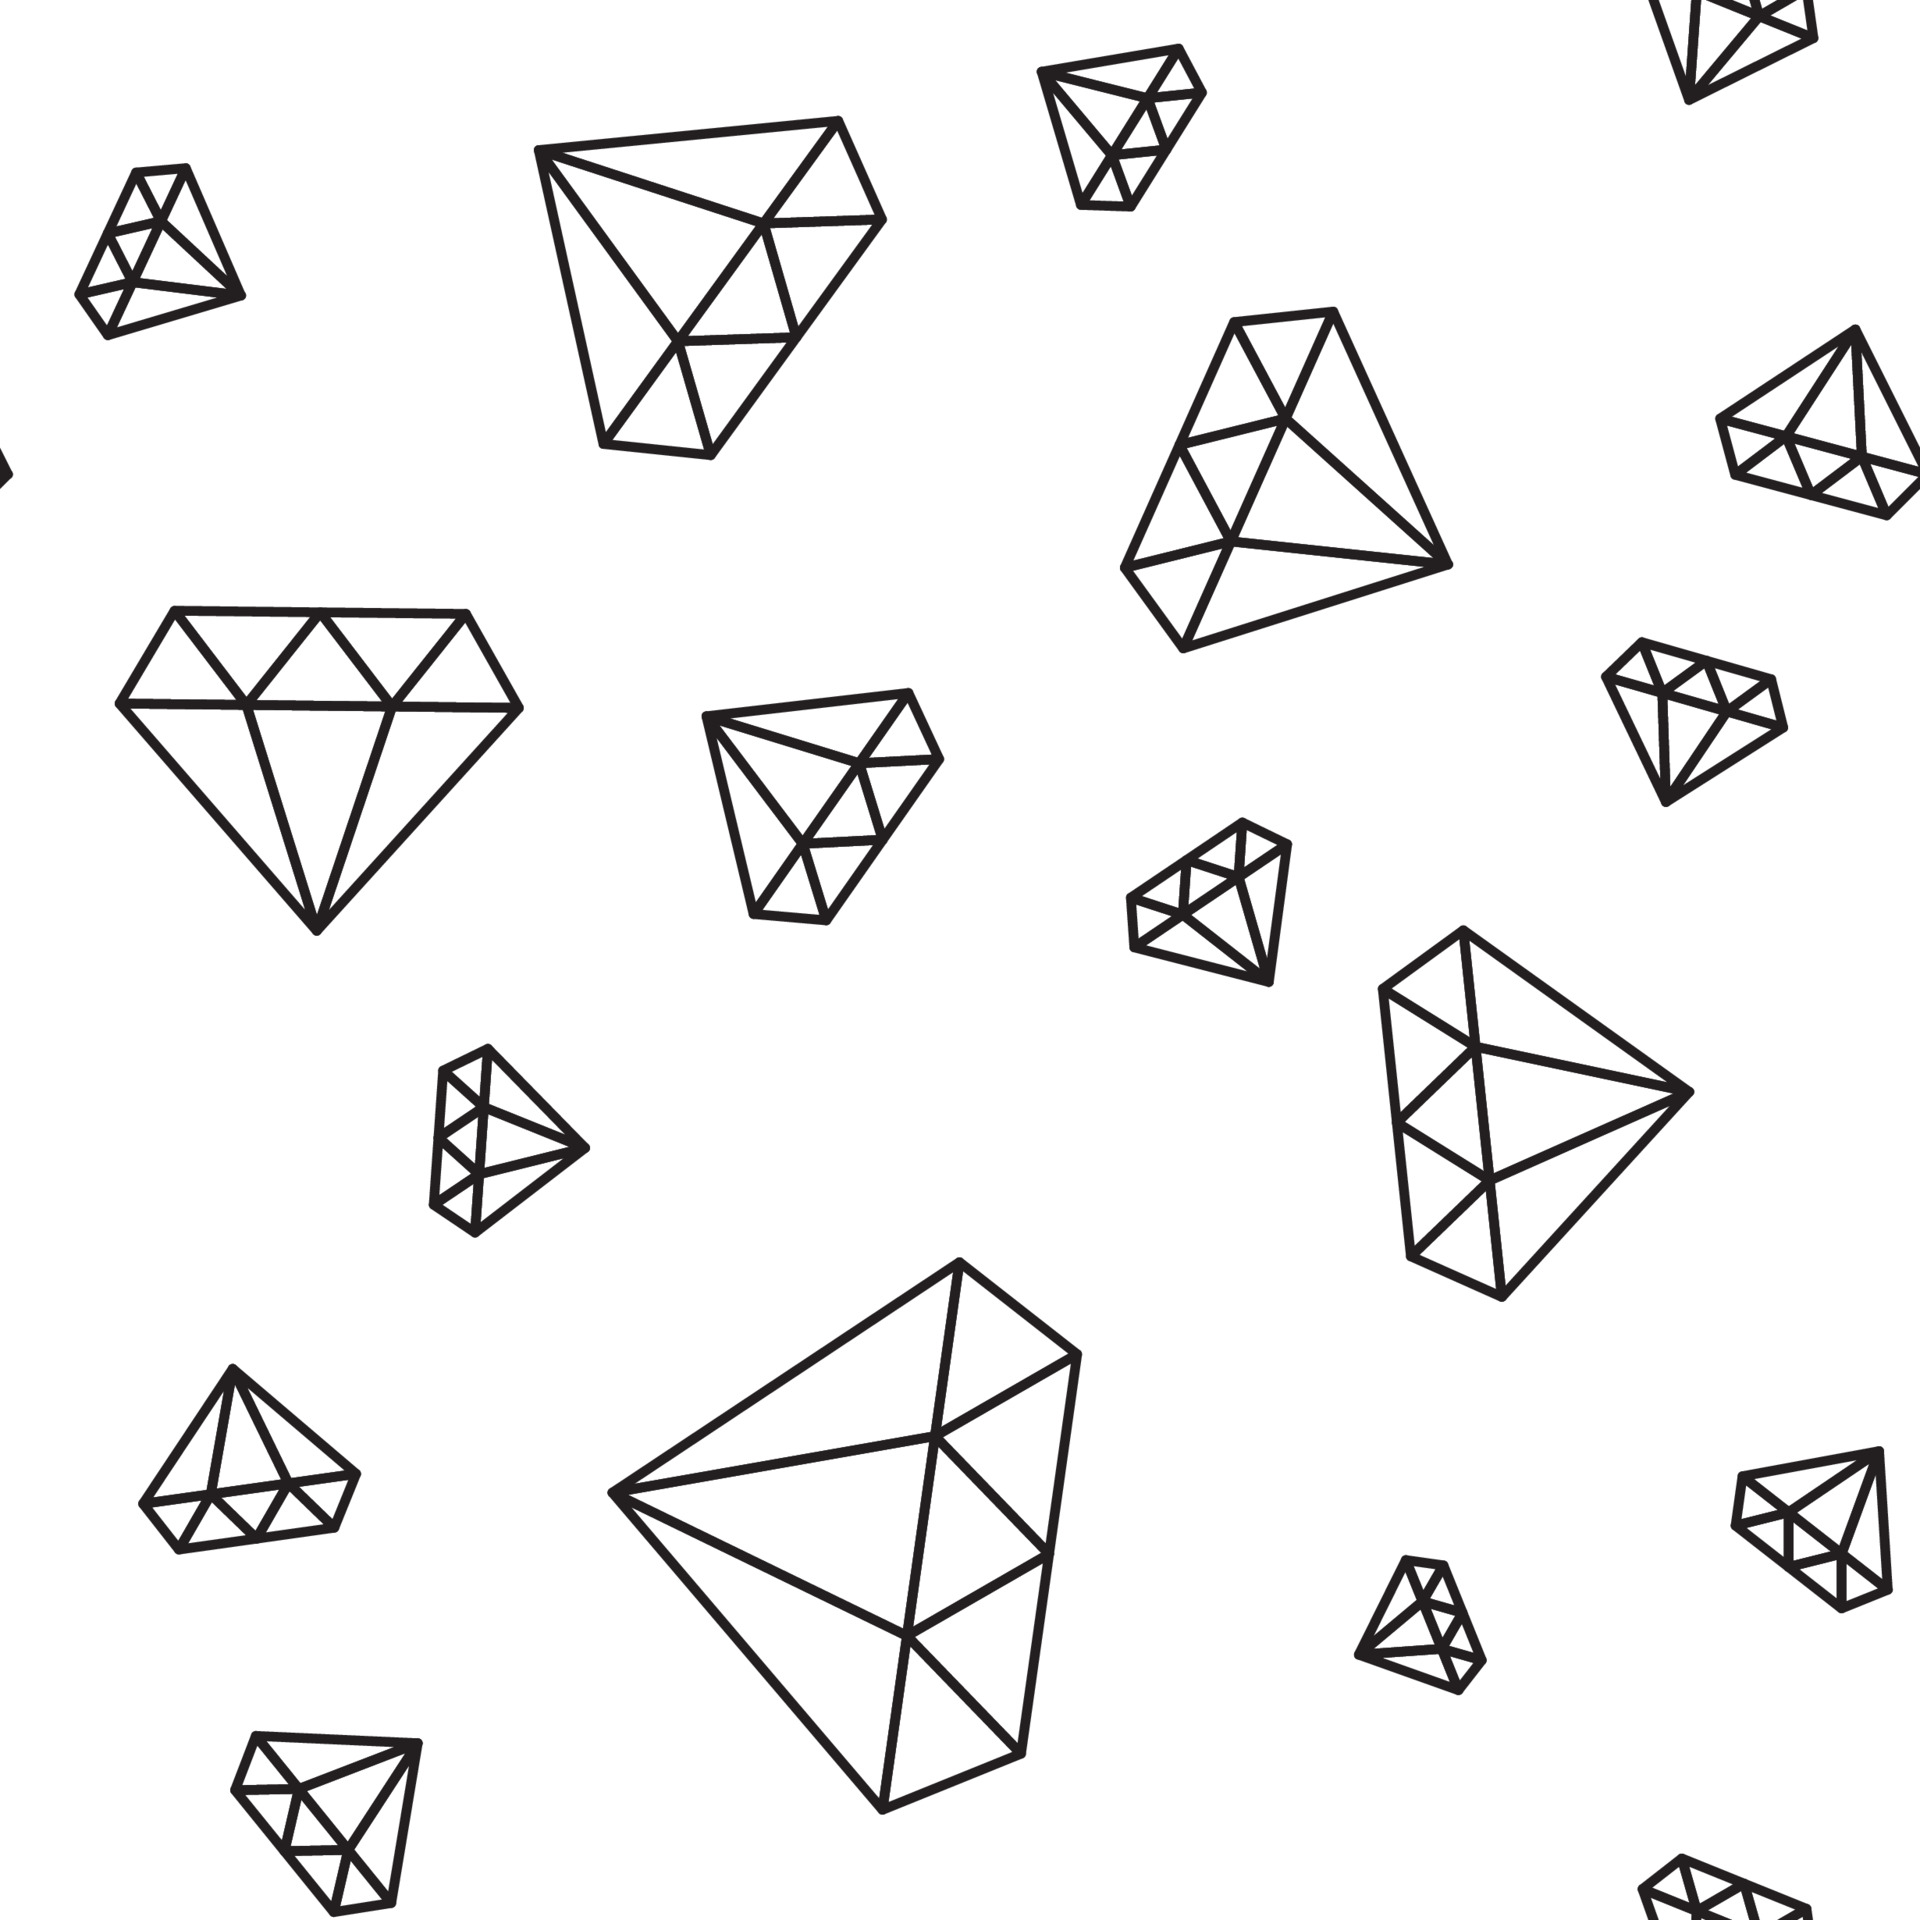 Vertical 2D illustration of a seamless diamond shape wallpaper